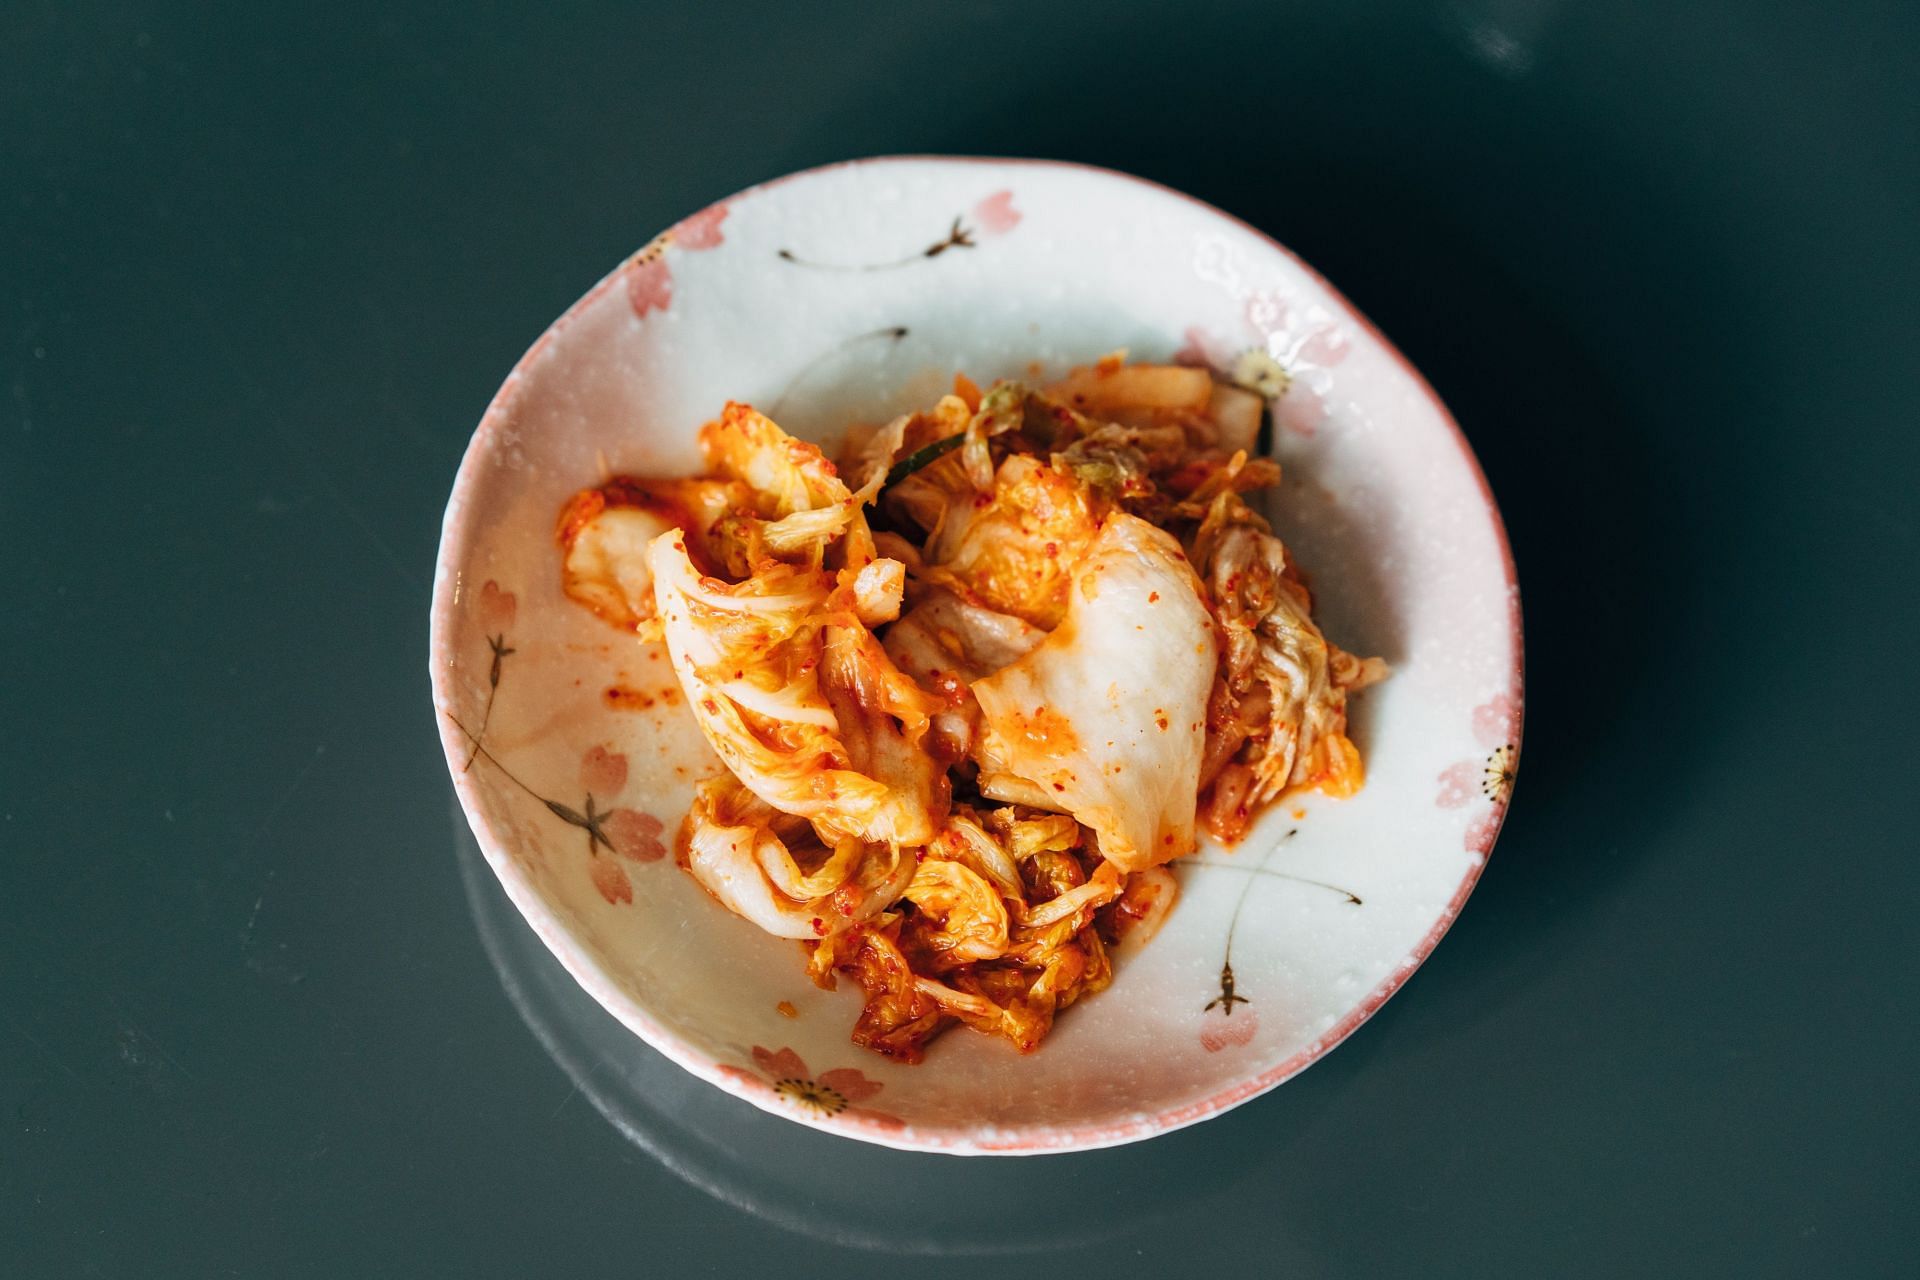 The nutrient density makes kimchi good for you. (Image via Unsplash/Markus Winkler)